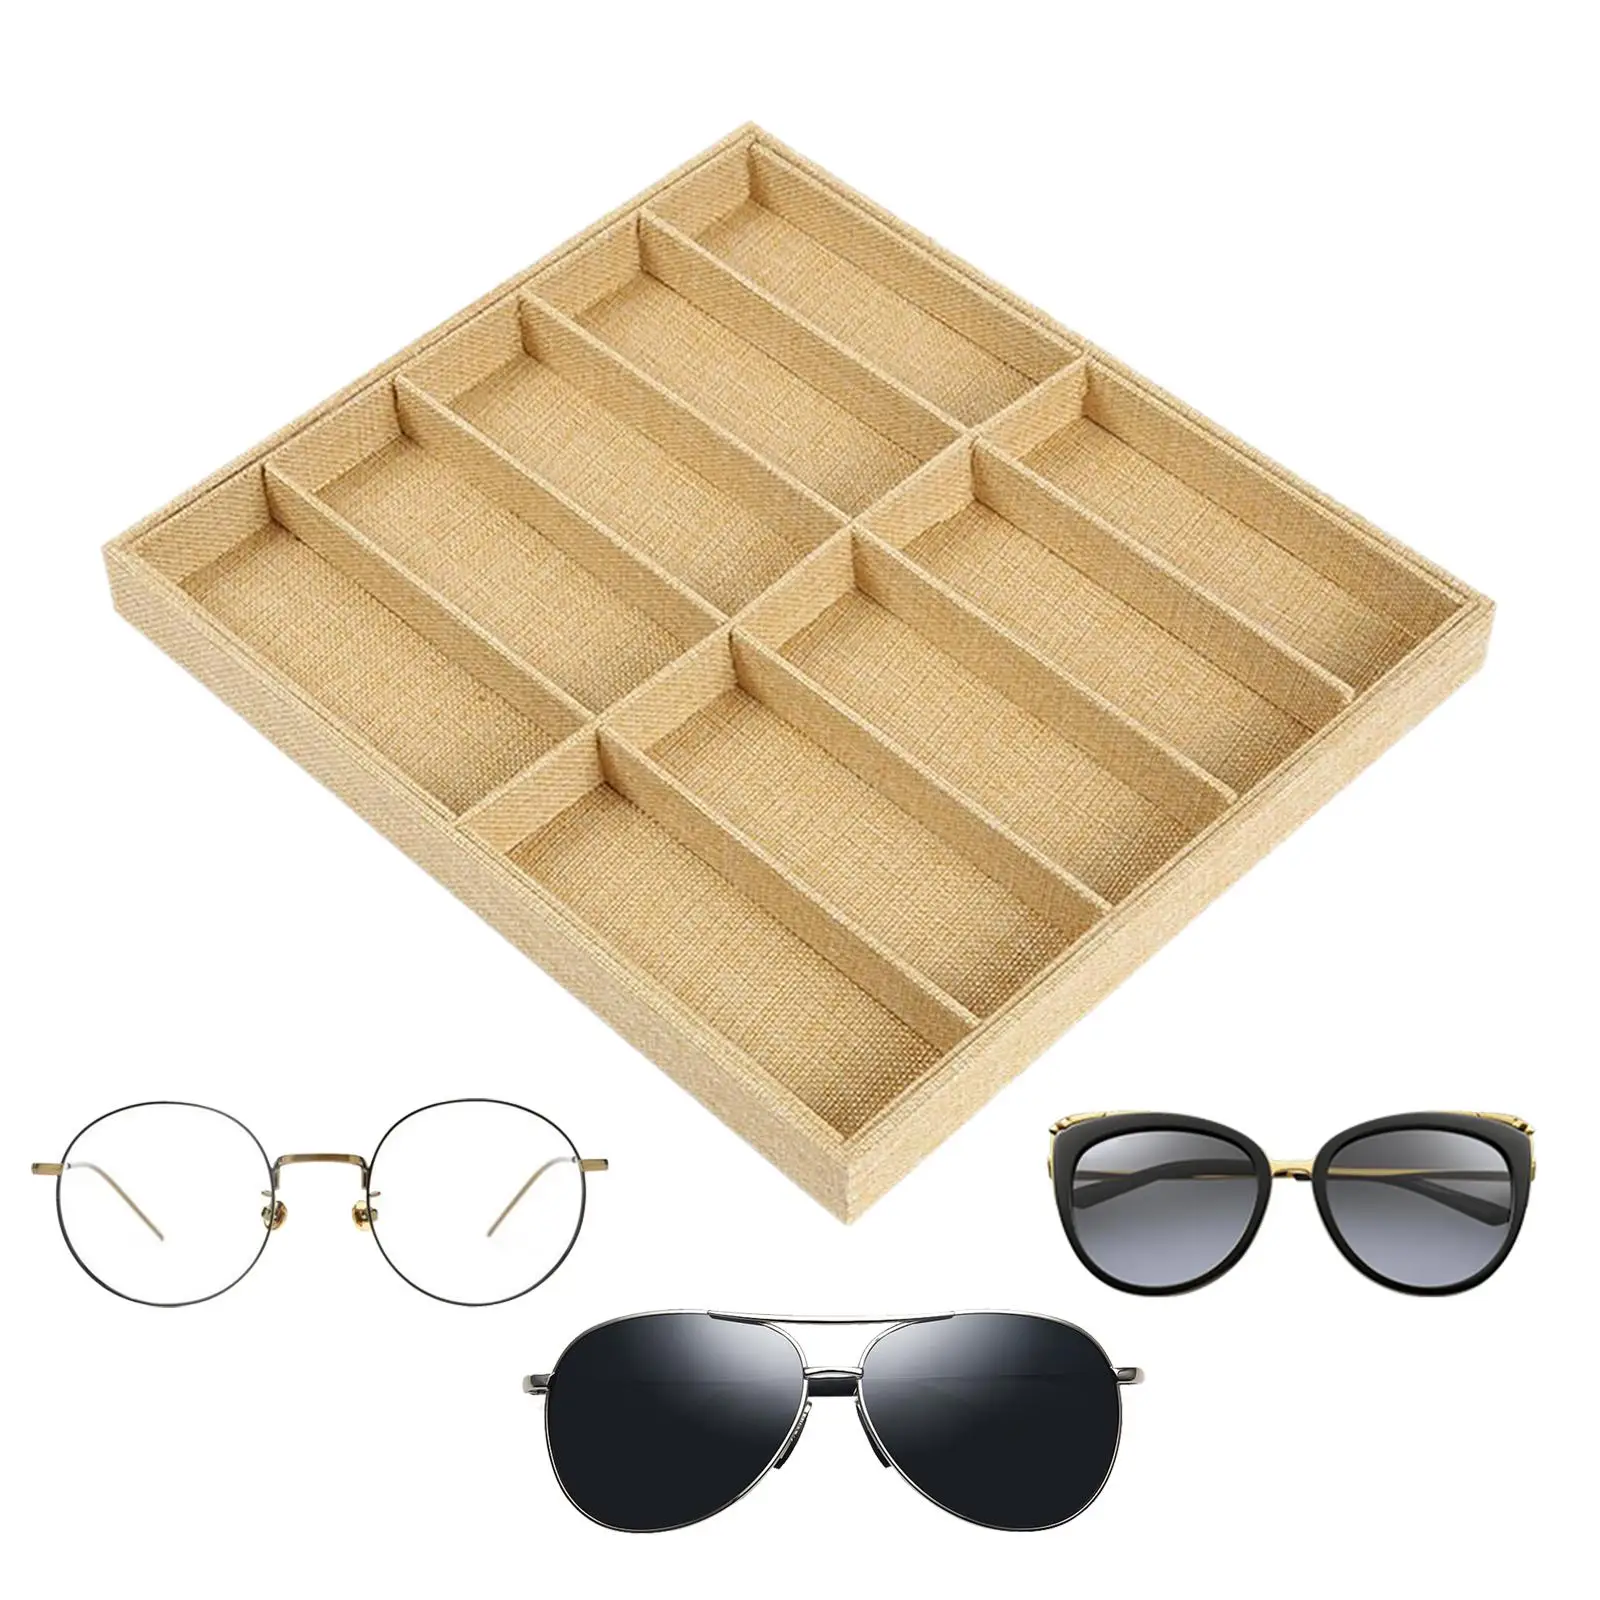 Glasses Organizer Multifunctional 10 Compartment Decorative Sunglasses Display Case for Travel Closet Showcase Dresser Tabletop